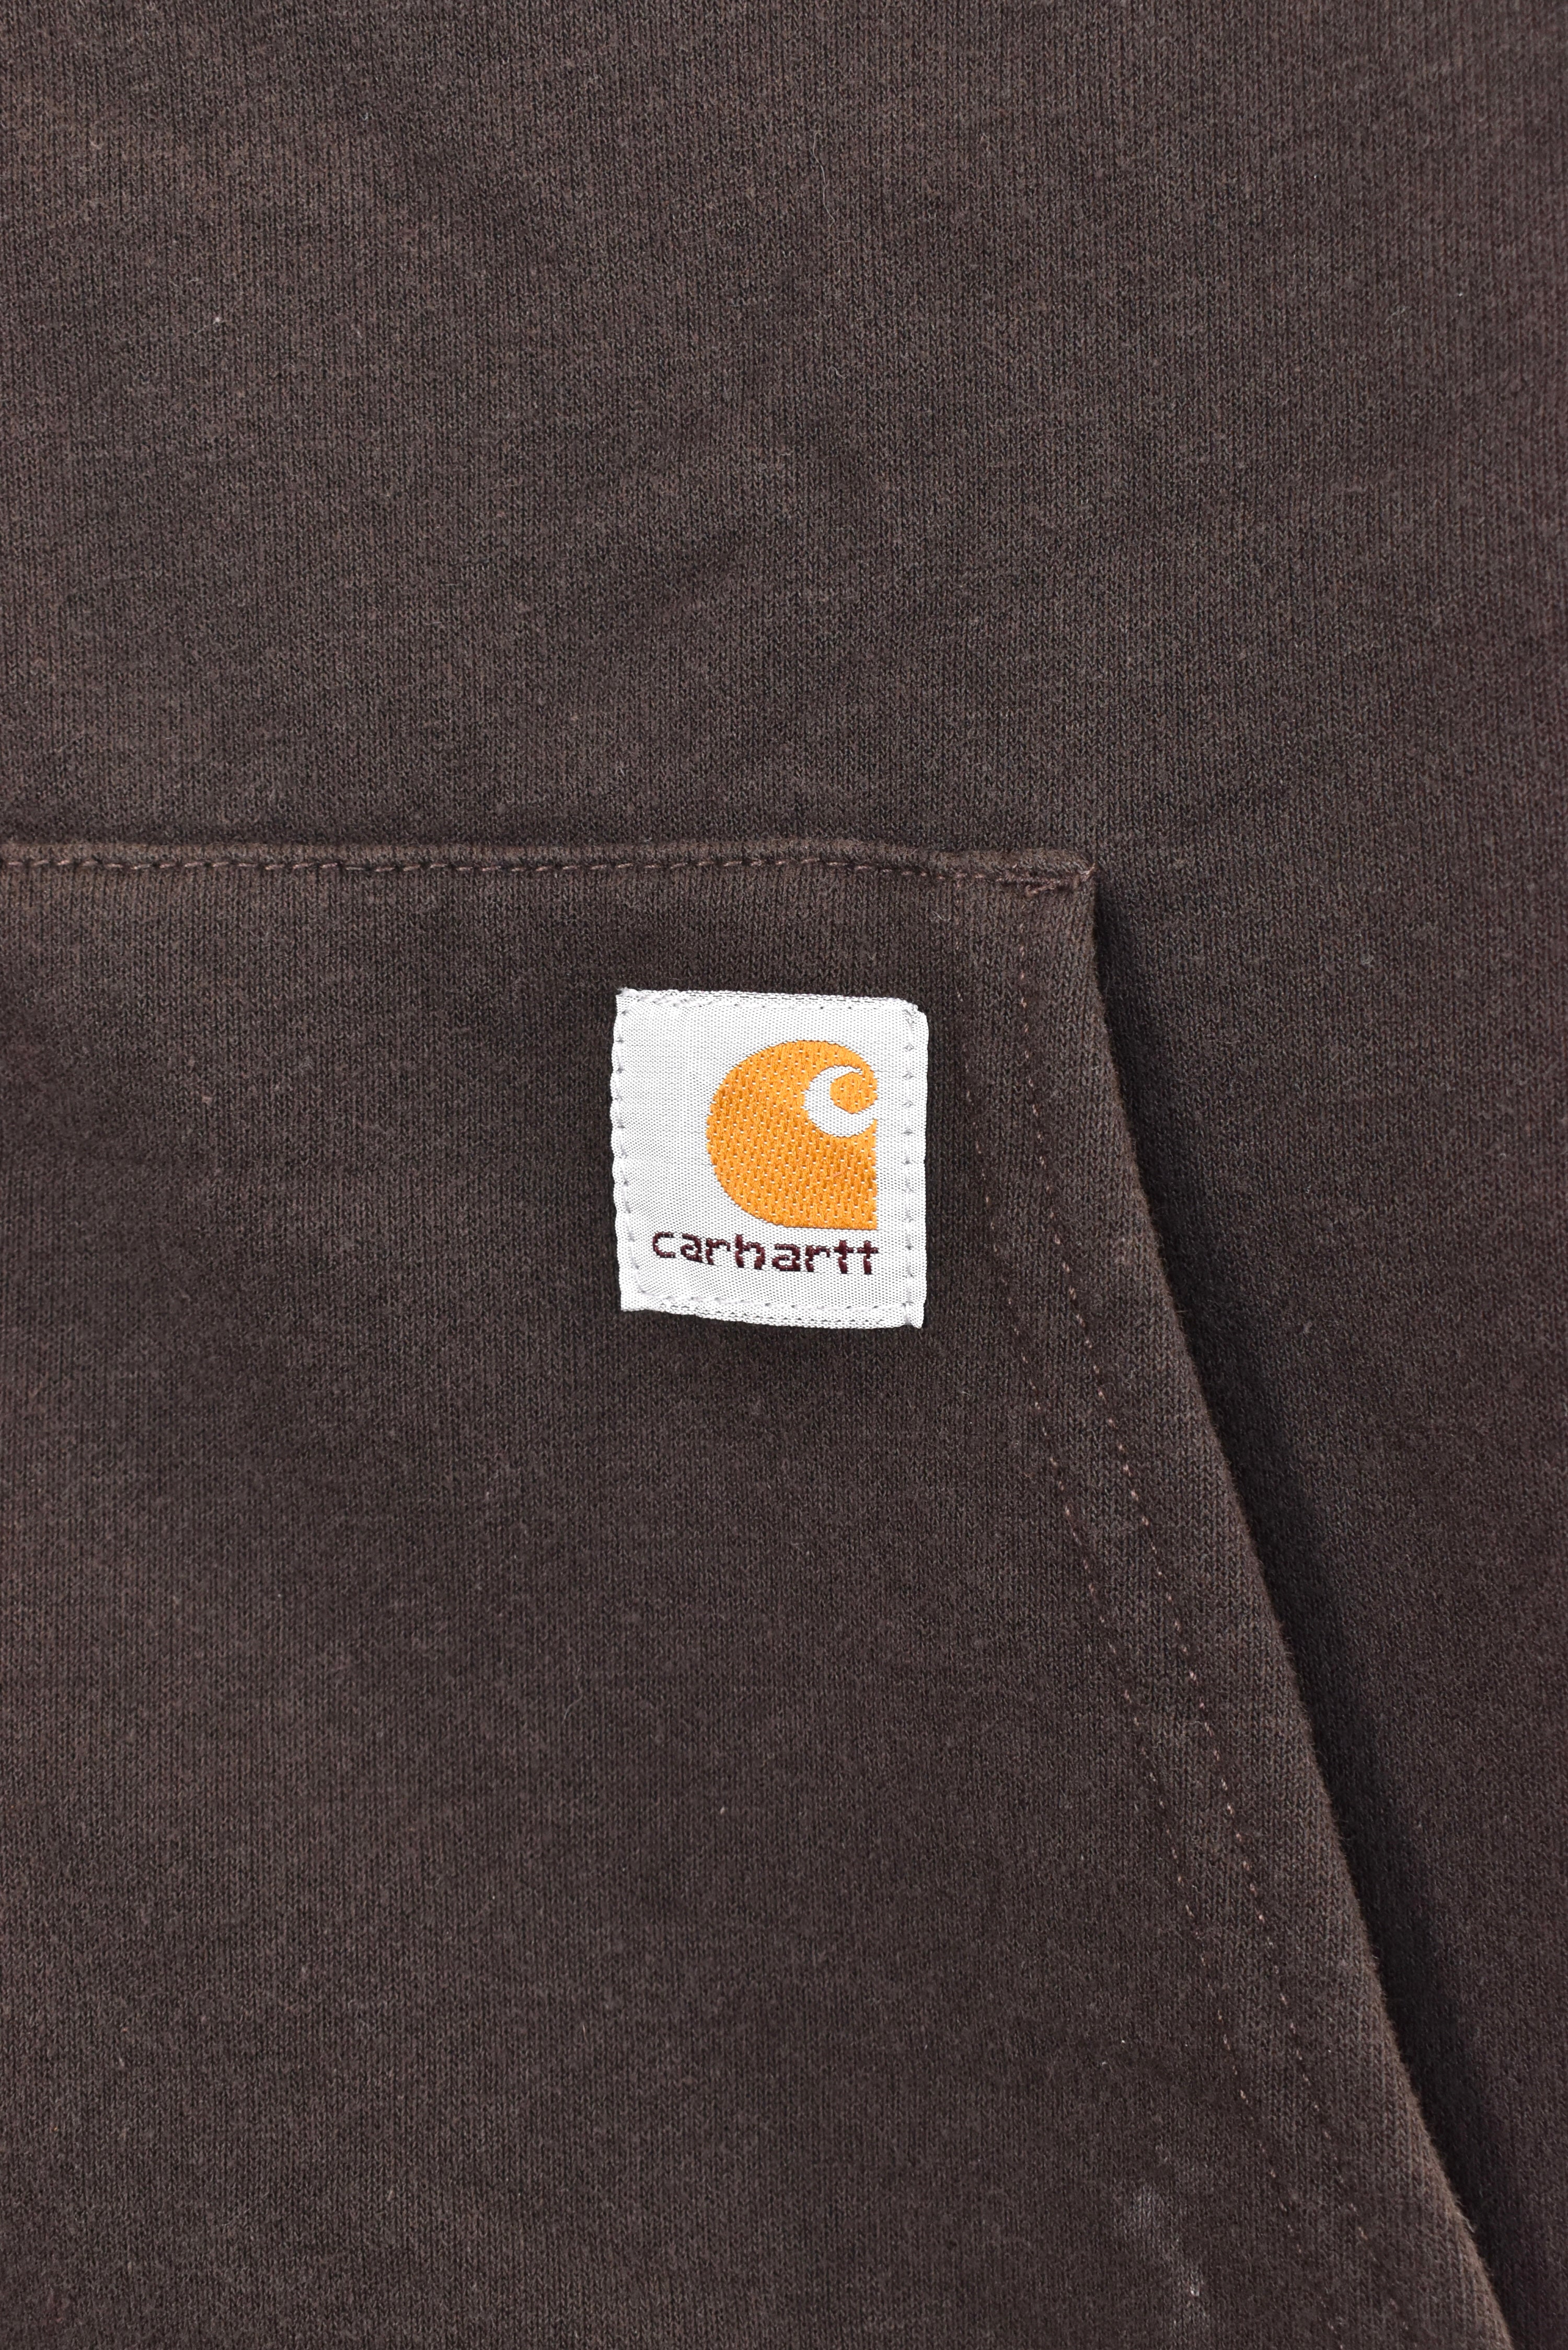 Women's vintage Carhartt hoodie, brown embroidered sweatshirt - AU Small CARHARTT